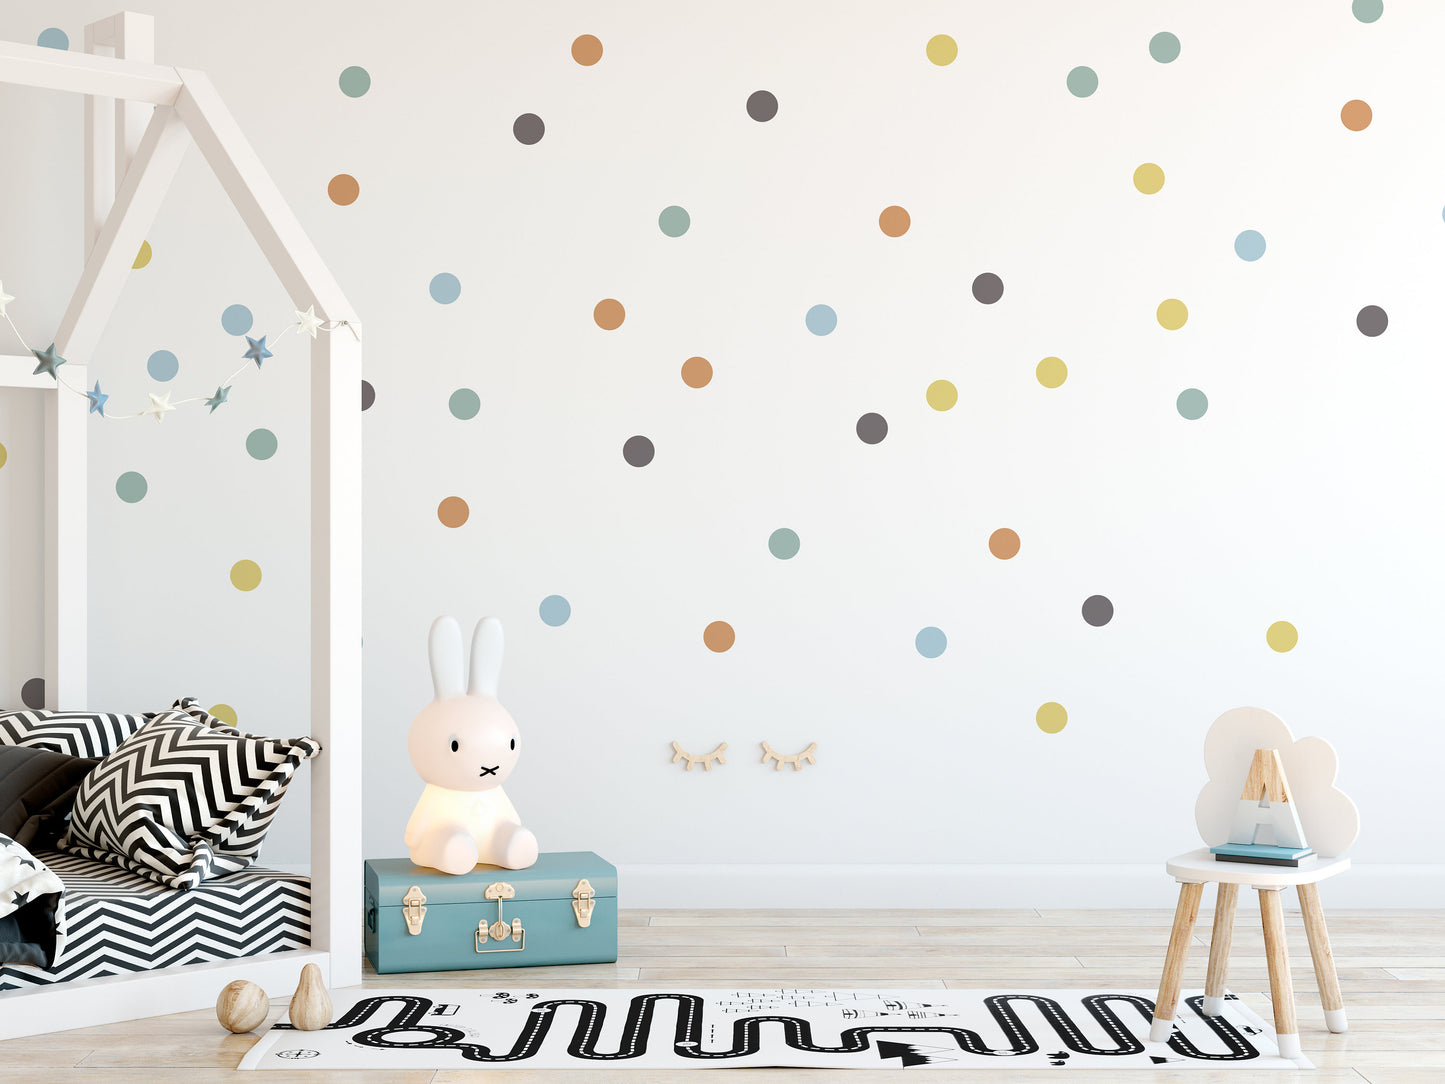 Round Dot Wall Stickers Boho Polka Dot Wall Decals Vinyl Wall Art Kids Nursery Children's Bedroom Wall Art Decor Home